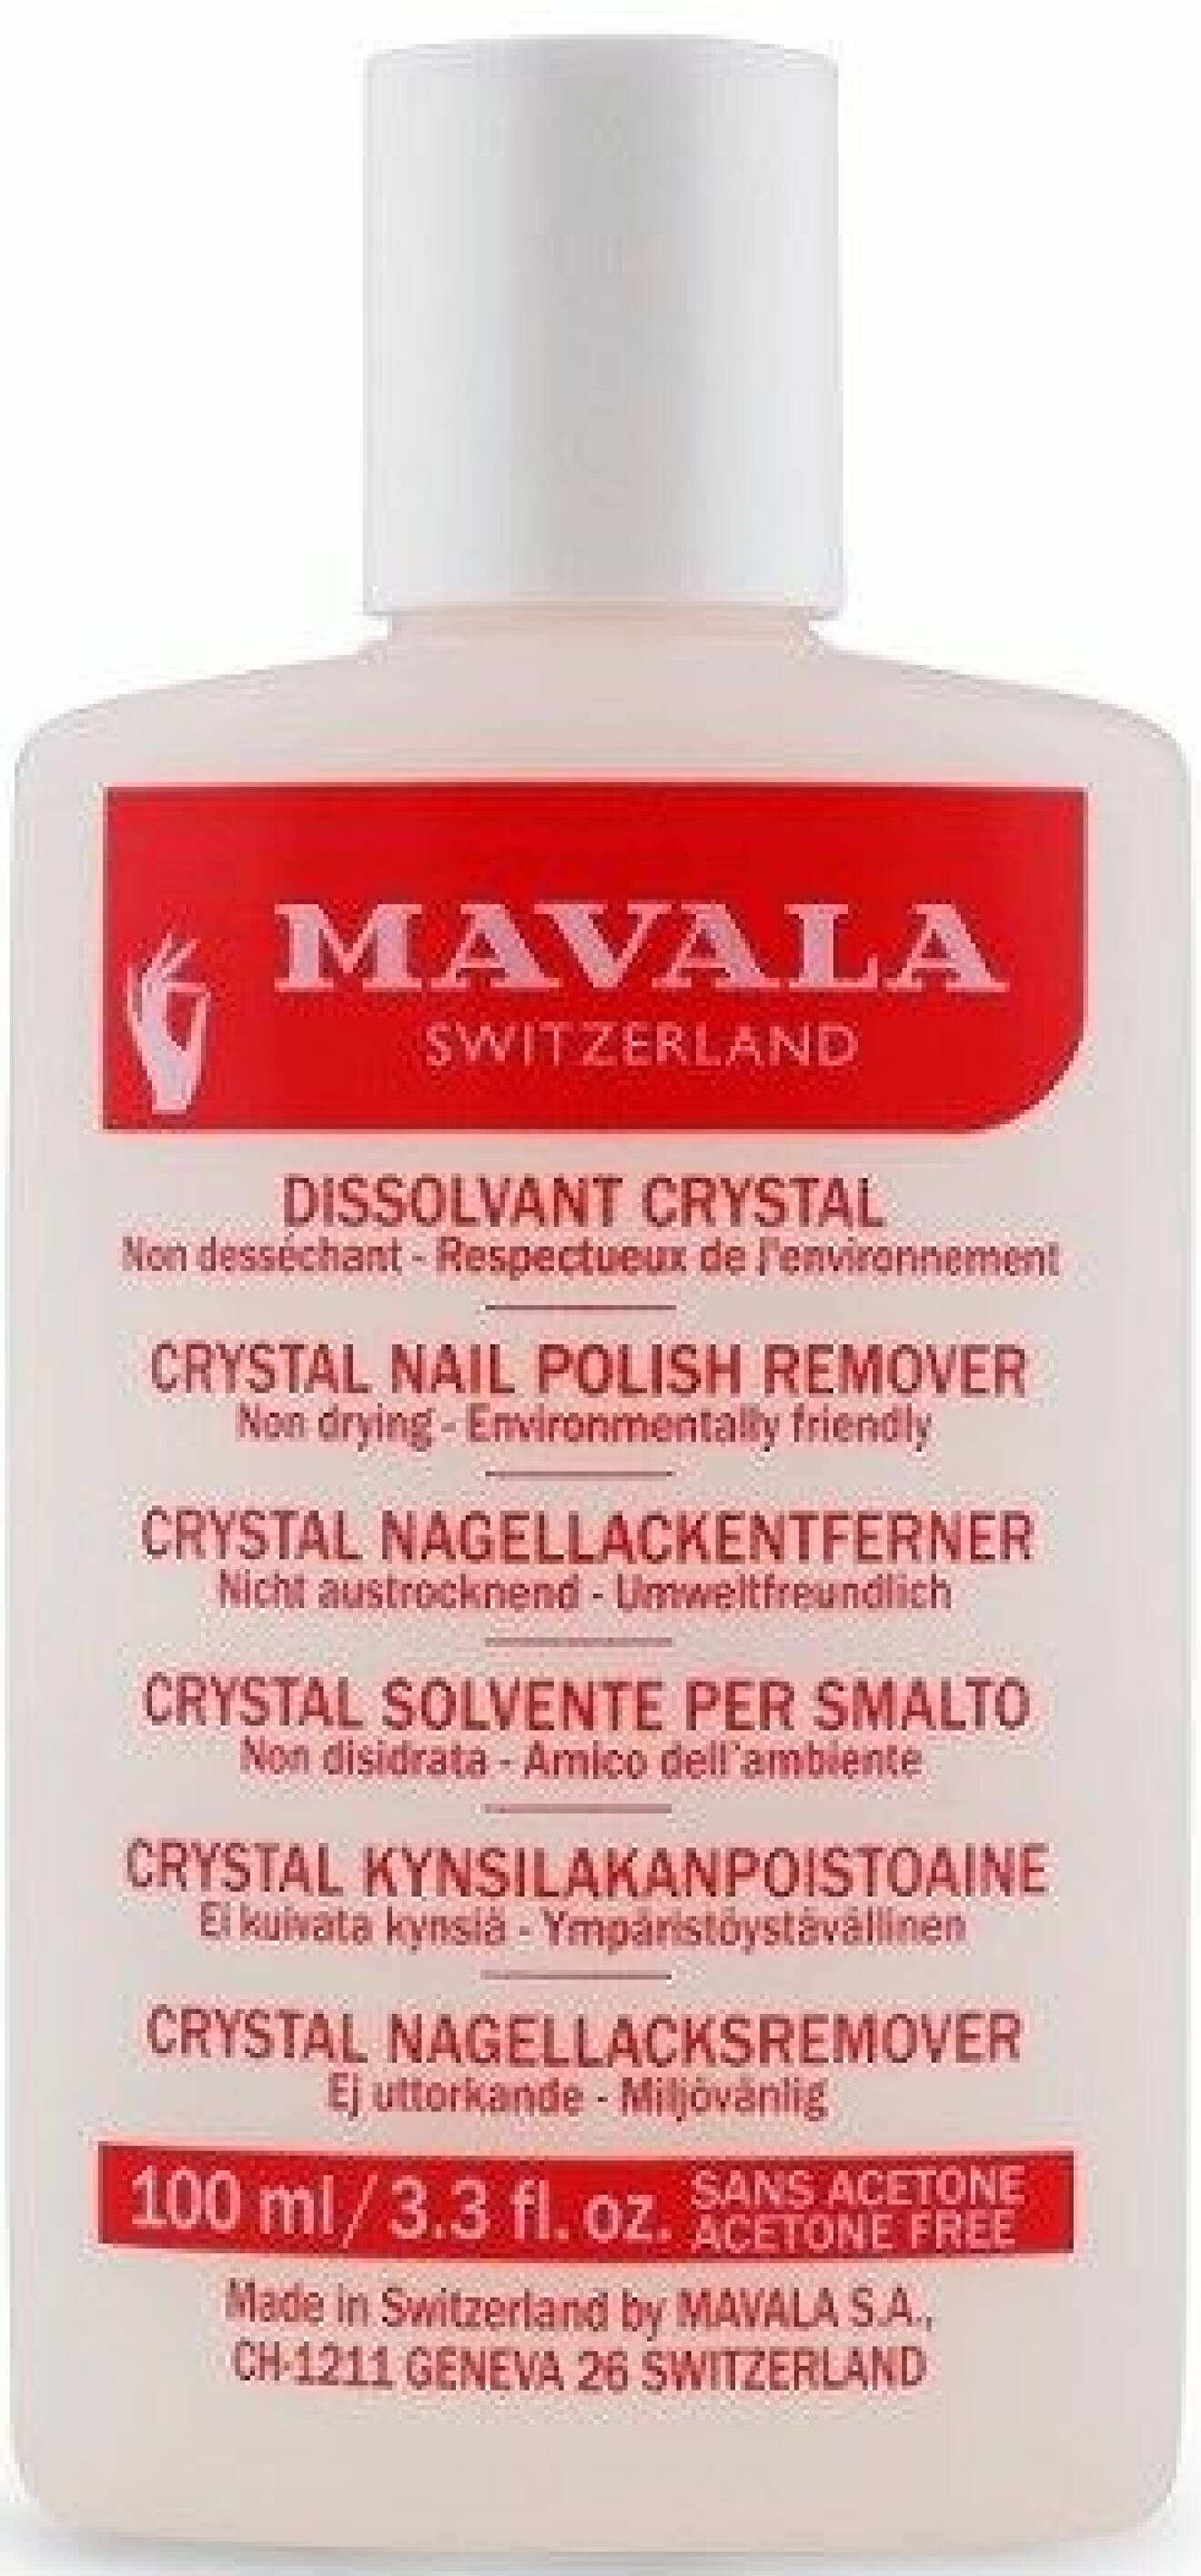 mavala-crystal-nagellacksremover-1198-131-0100_1